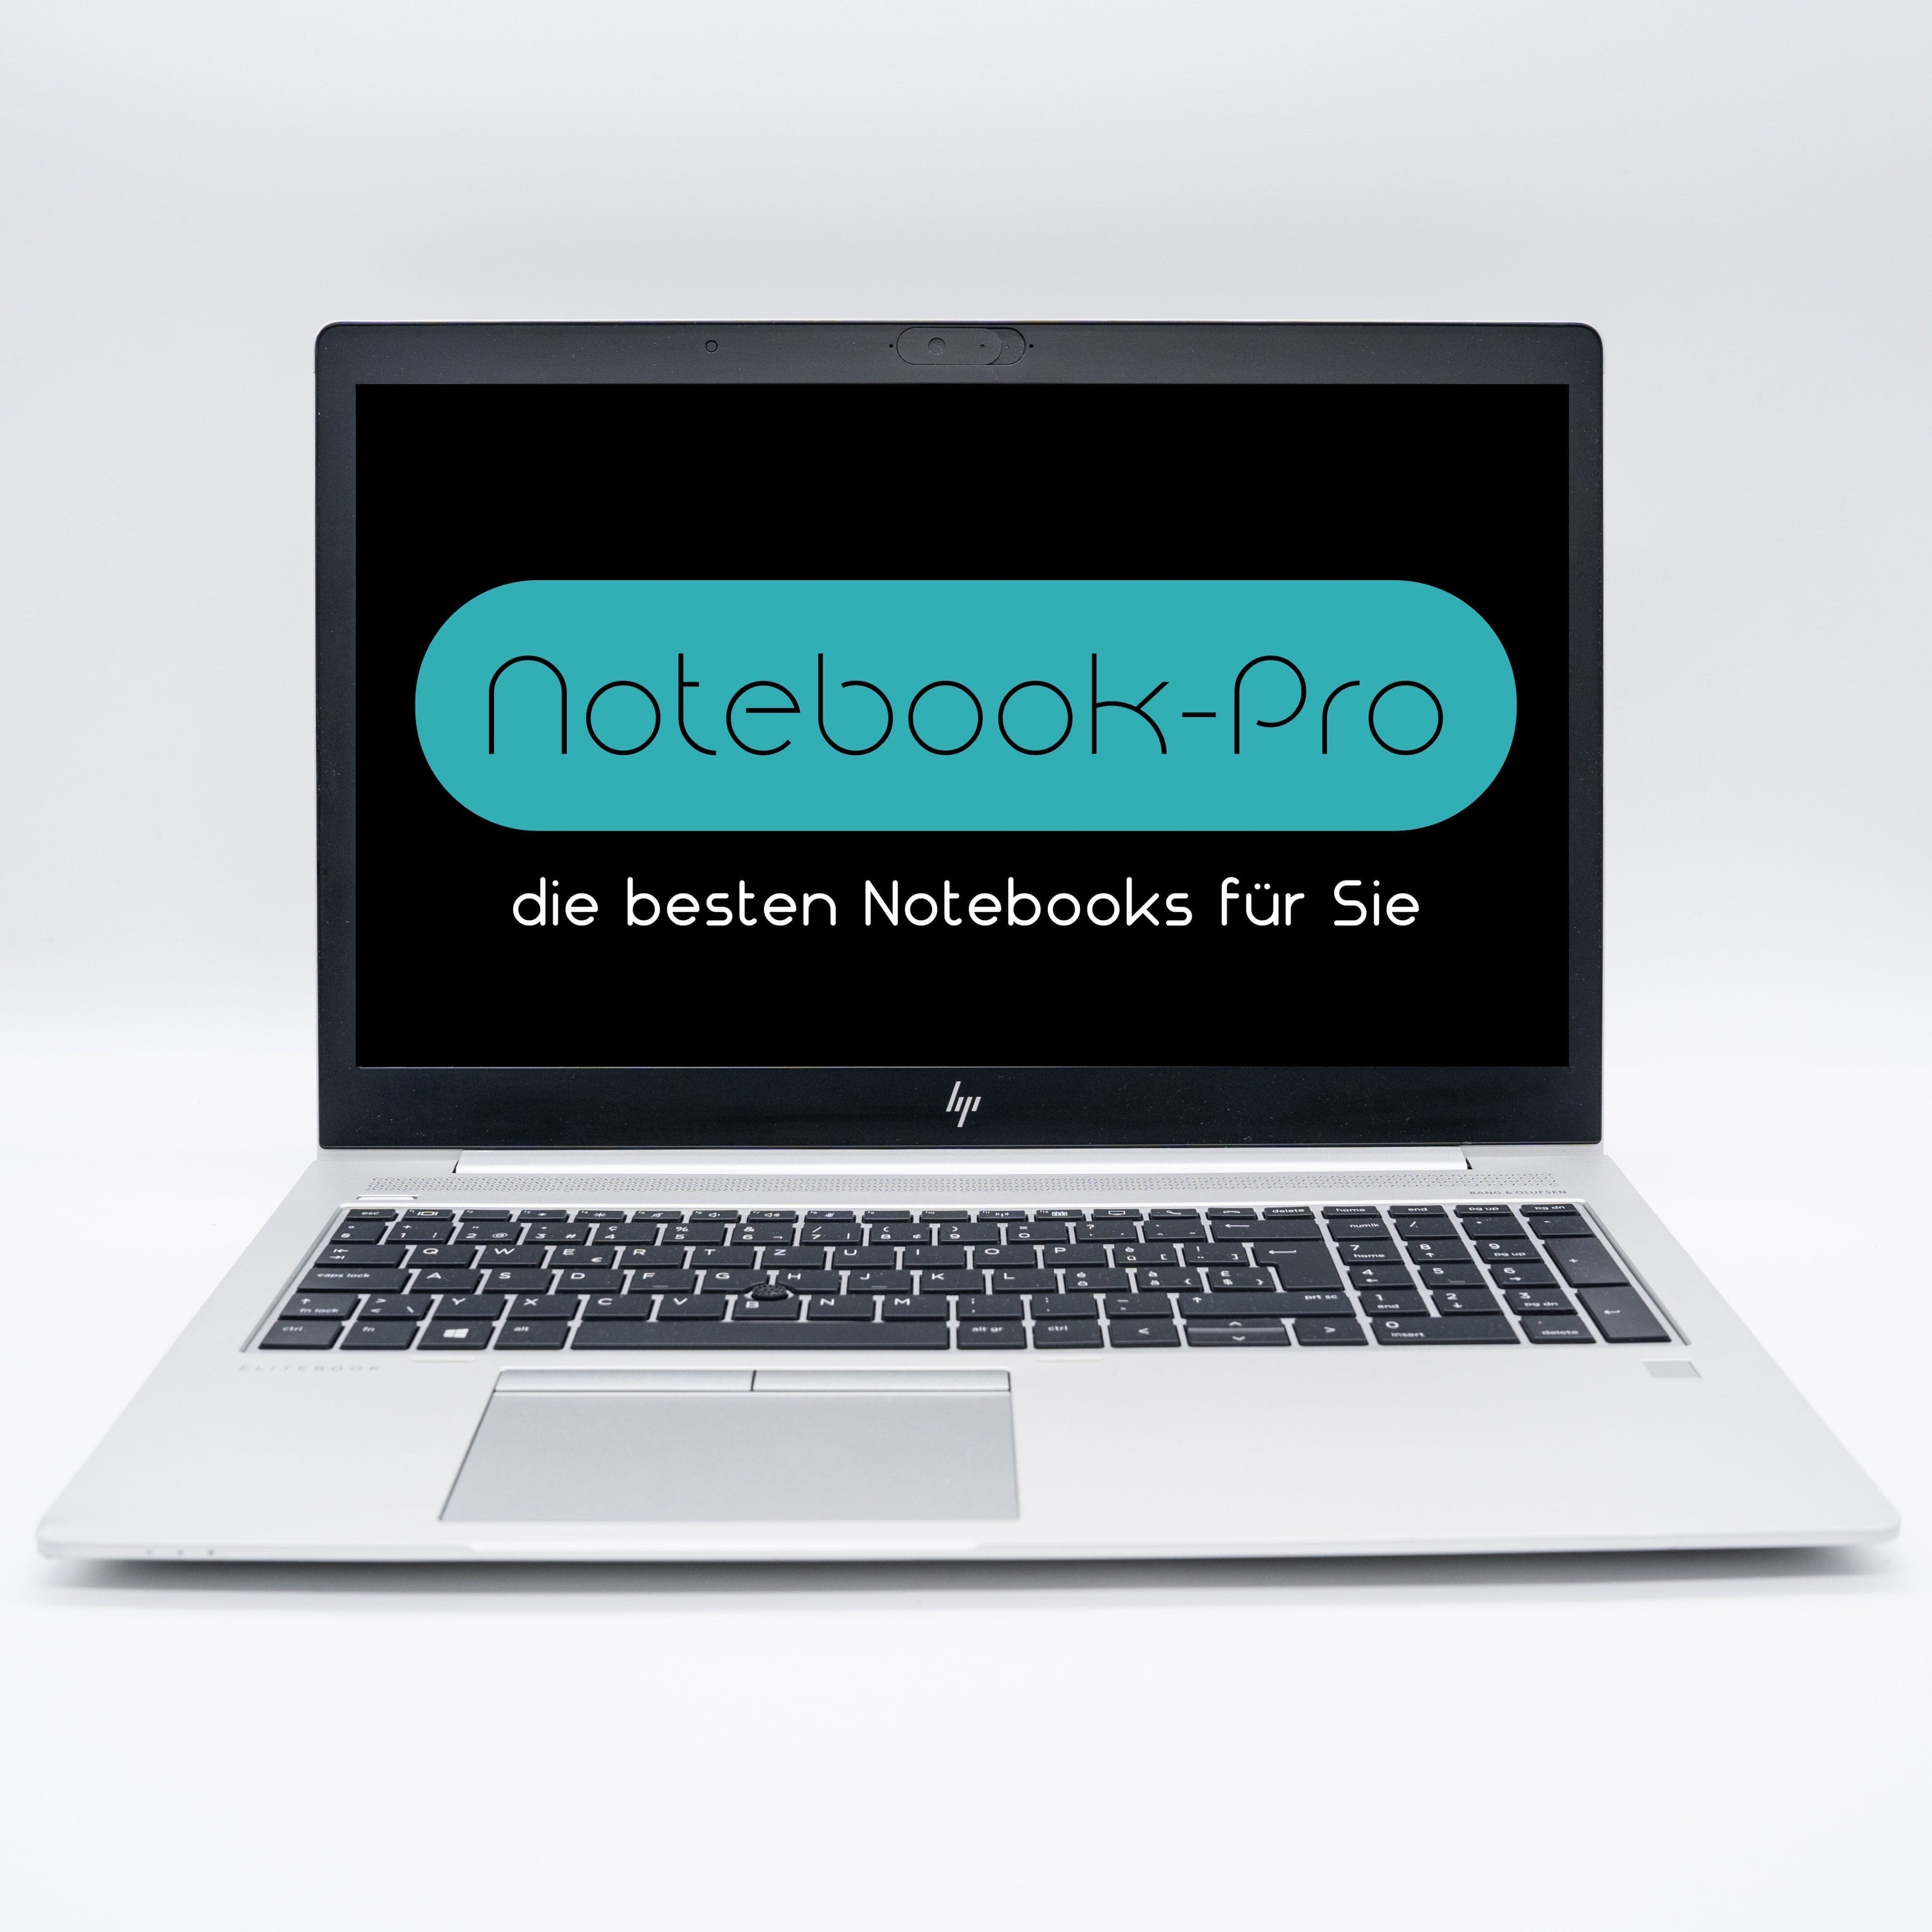 HP EliteBook 850 G5 Intel i5-7300U 8GB DDR4 256GB NVMe SSD LTE FHD Laptops Notebook-Pro 